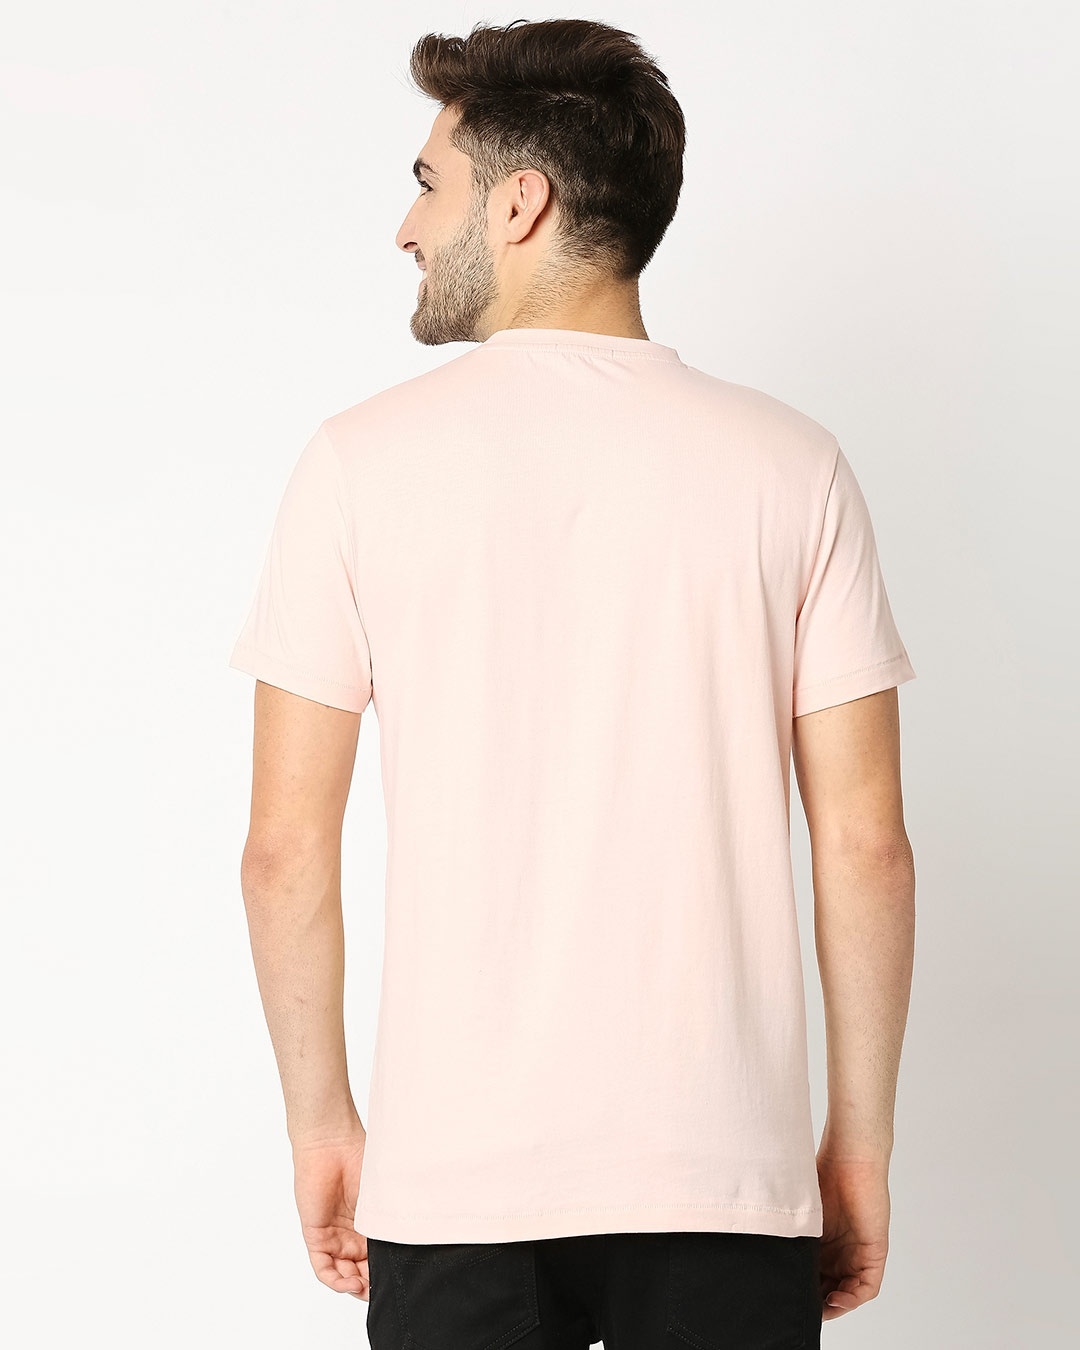 Shop Seashell Pink Candy Color Block T-Shirt-Design